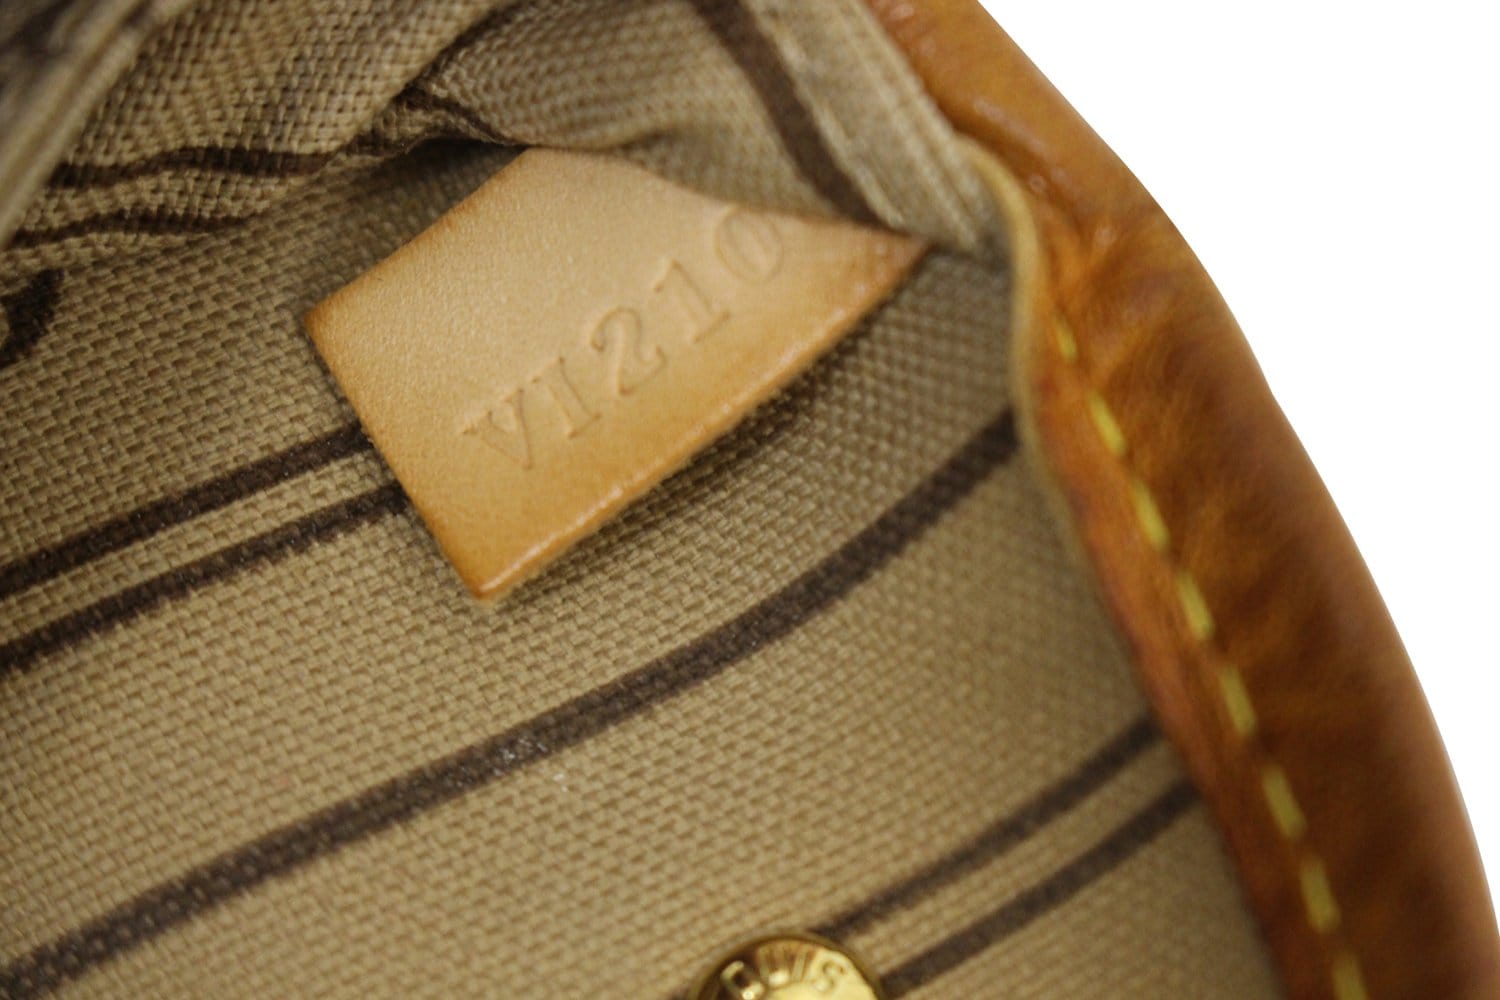 Louis Vuitton Neverfull Pm Monogram, Bag - ADL1777